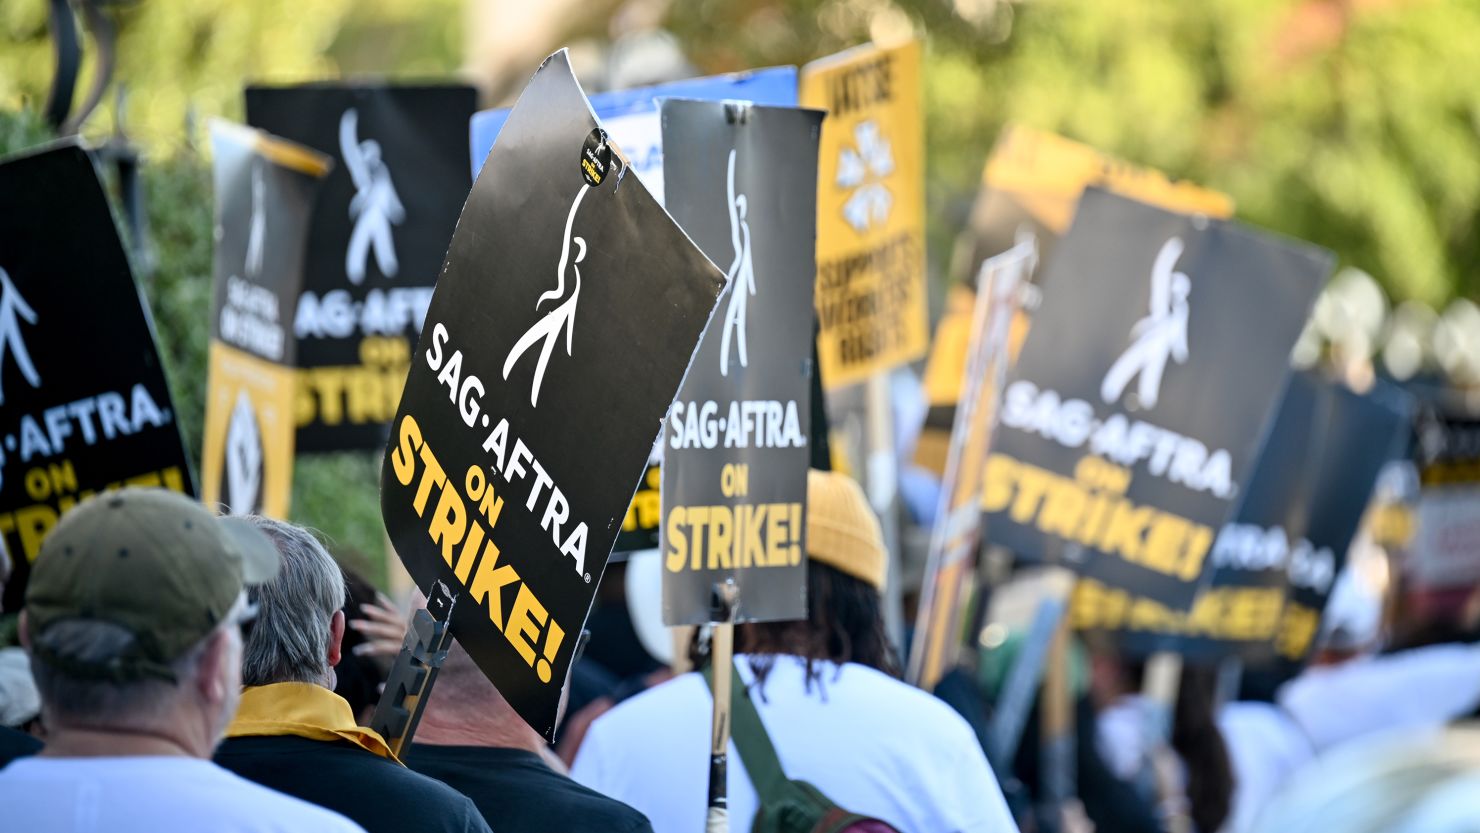 Members of SAG-AFTRA walk in protest at the SAG-AFTRA Strike at Walt Disney Studios on November 1, 2023 in Burbank, California.